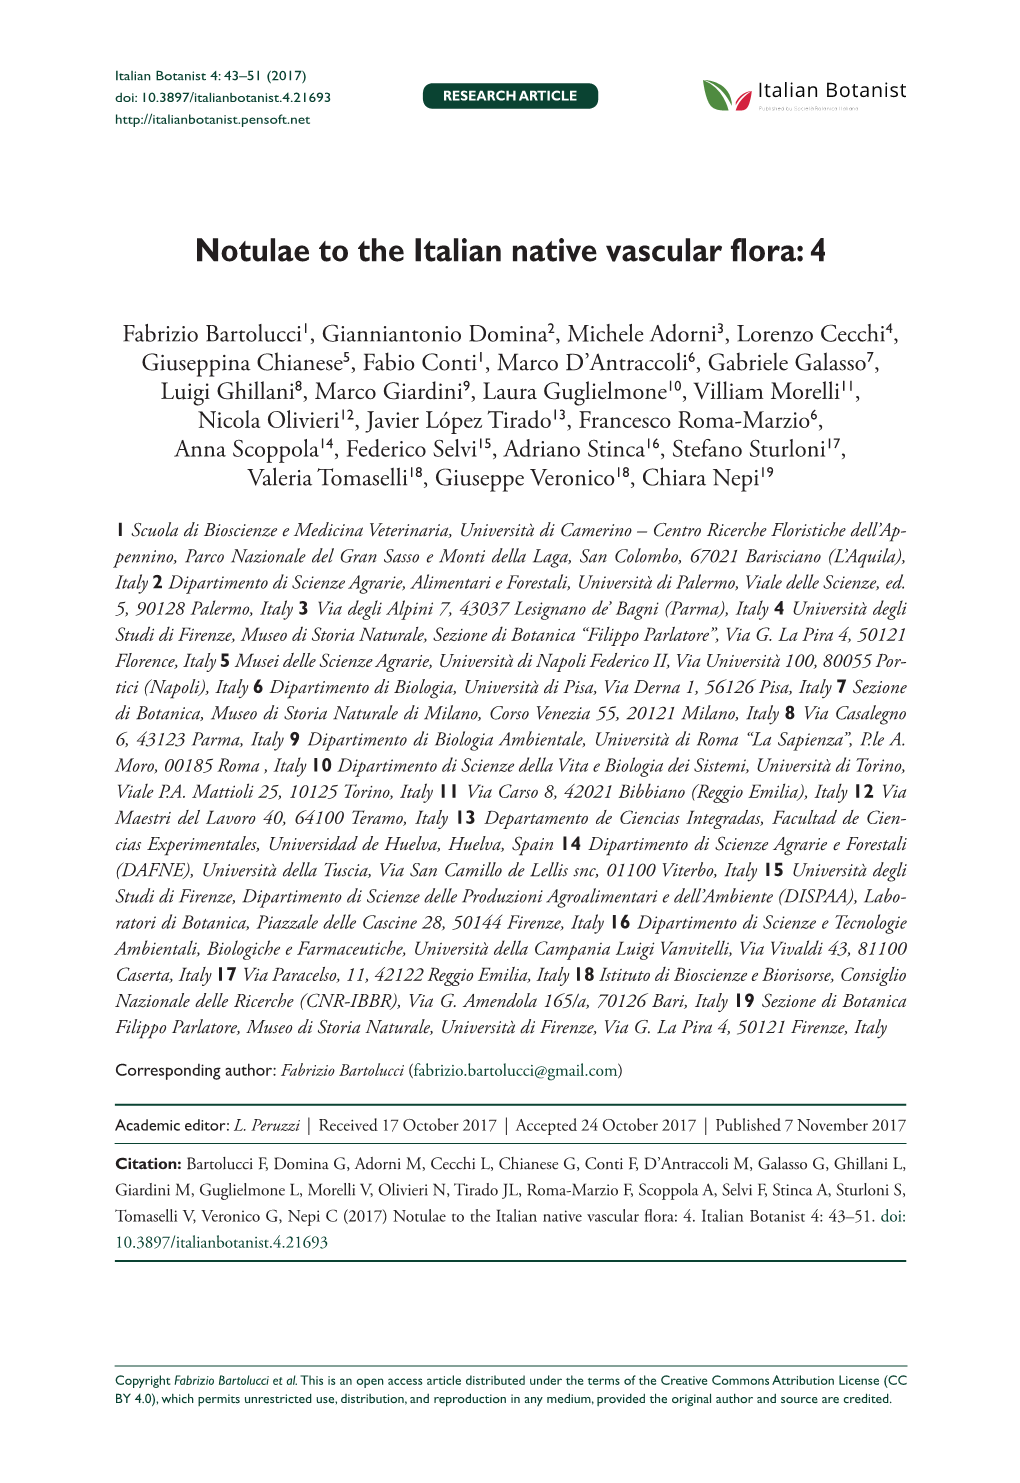 Notulae to the Italian Native Vascular Flora: 4 43 Doi: 10.3897/Italianbotanist.4.21693 RESEARCH ARTICLE